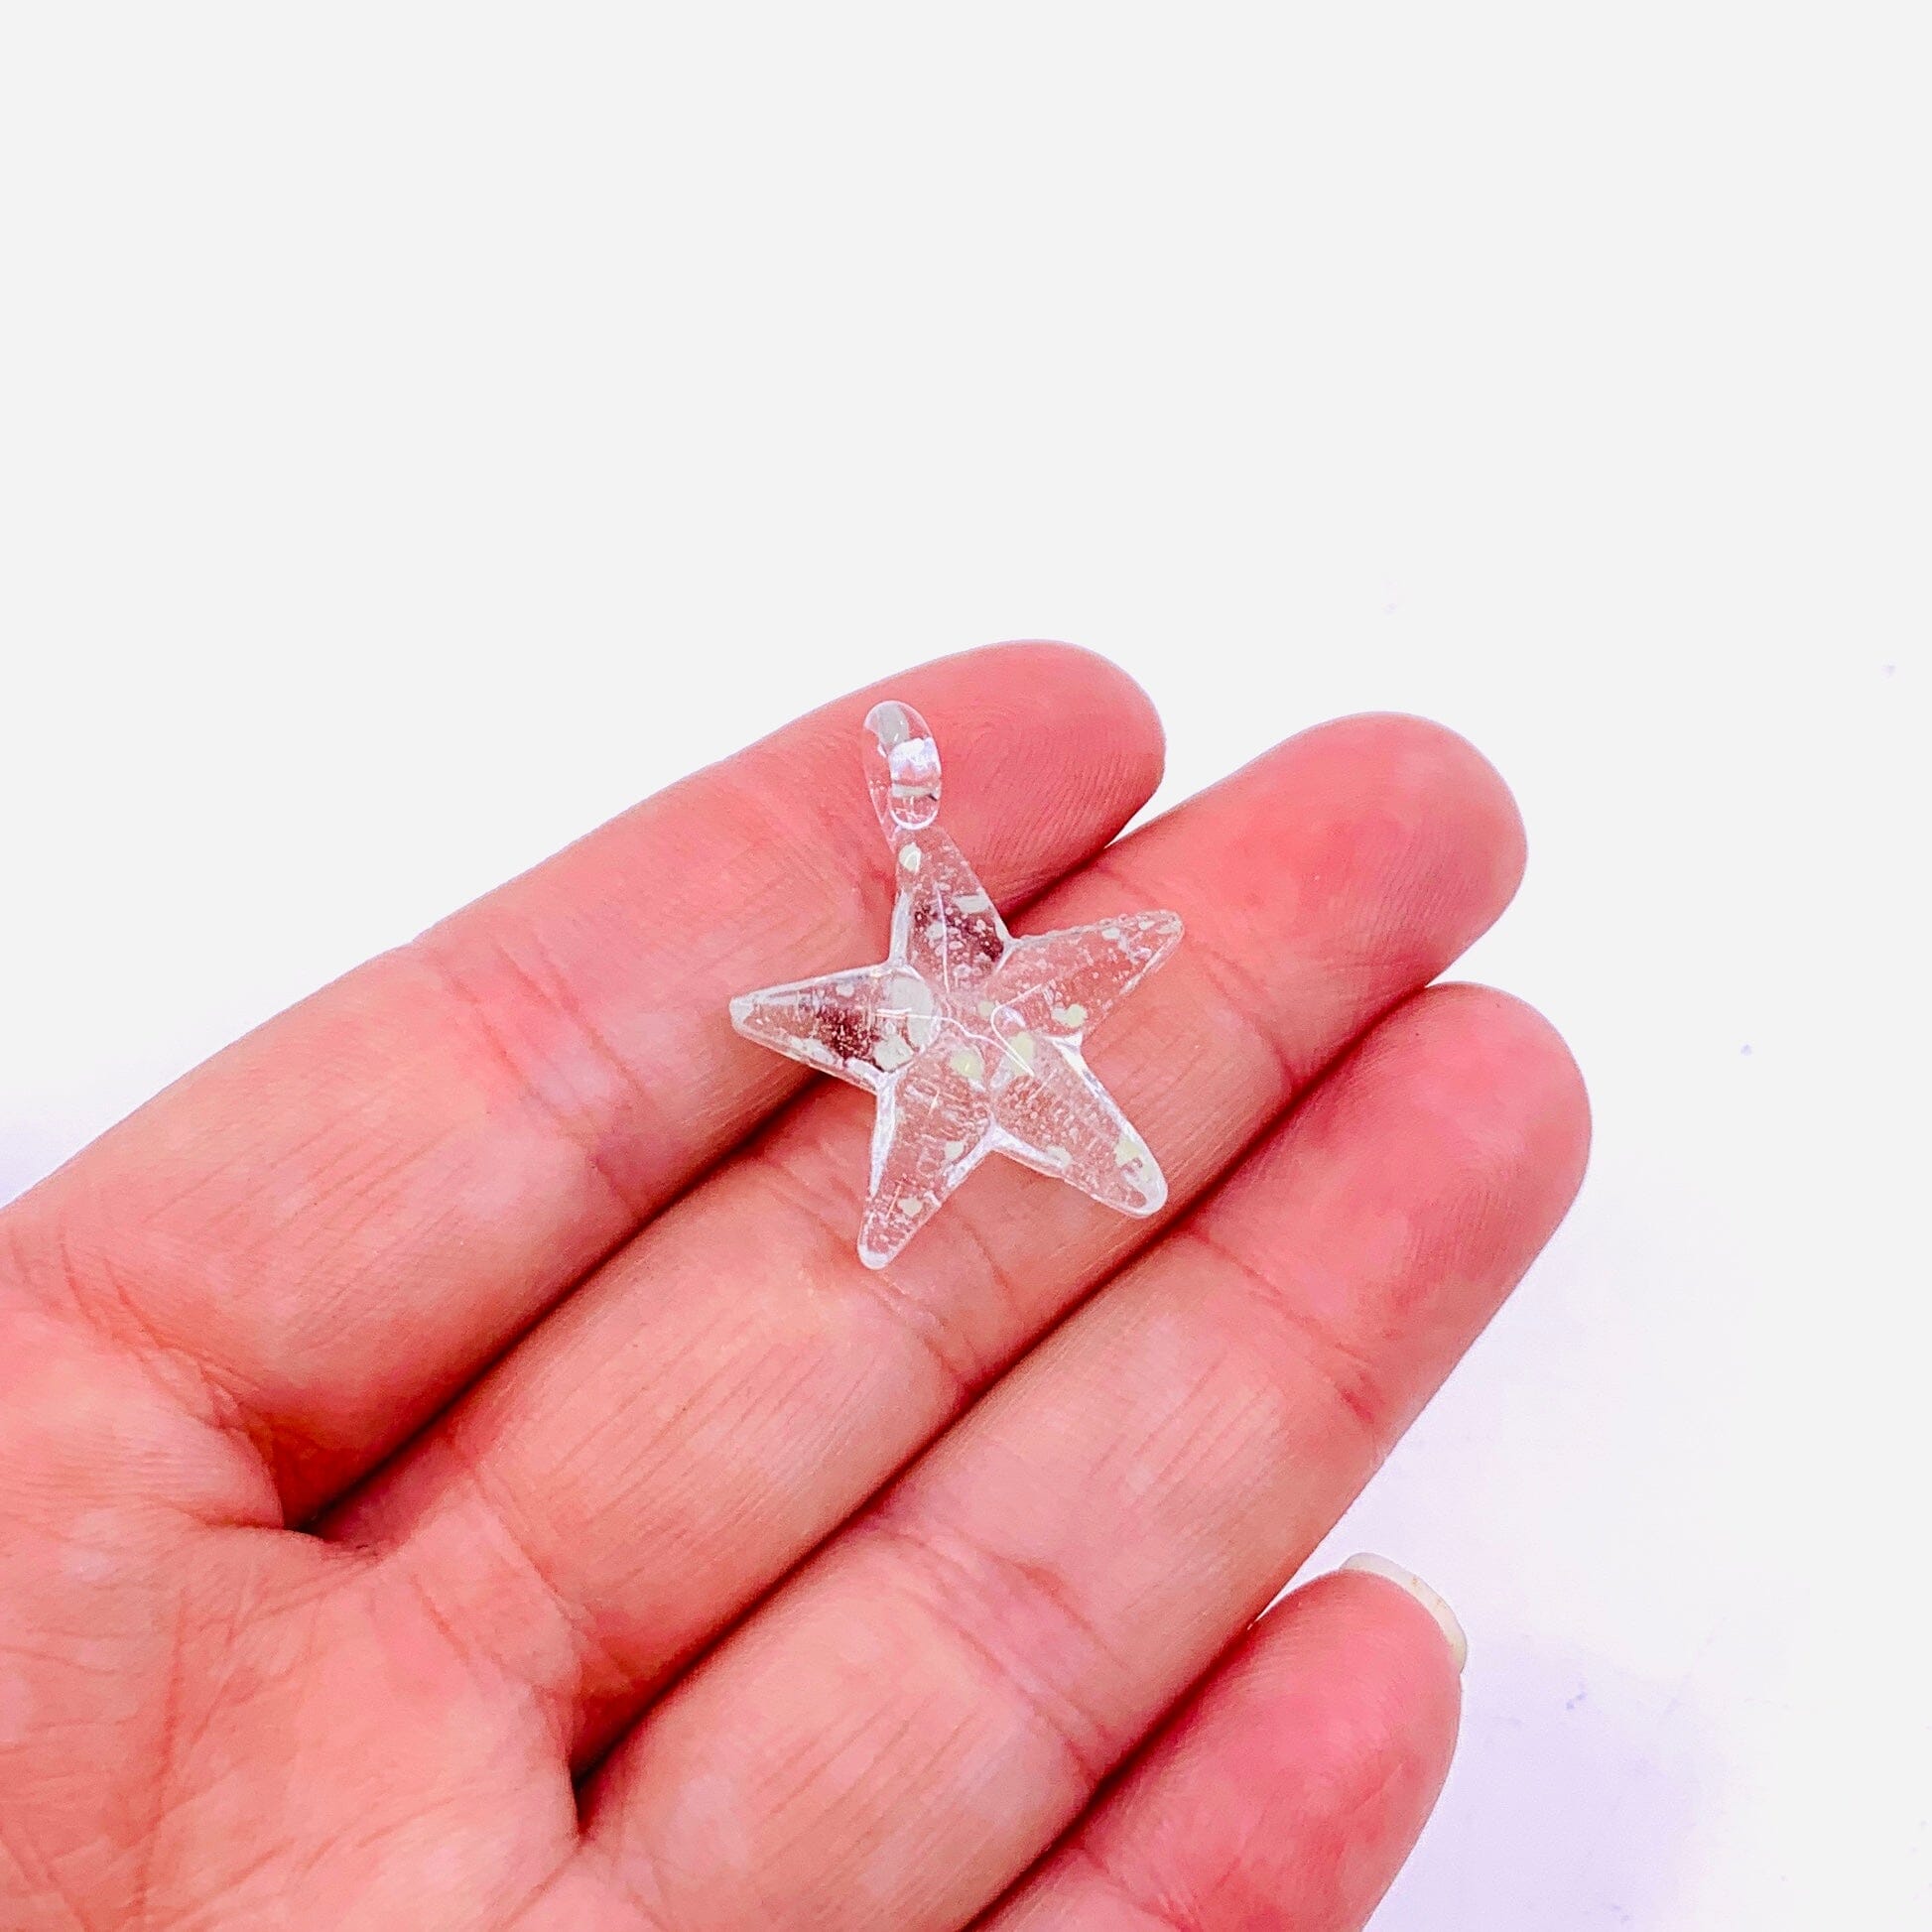 Glass Glow in the Dark Stars, Crystal Miniature - 